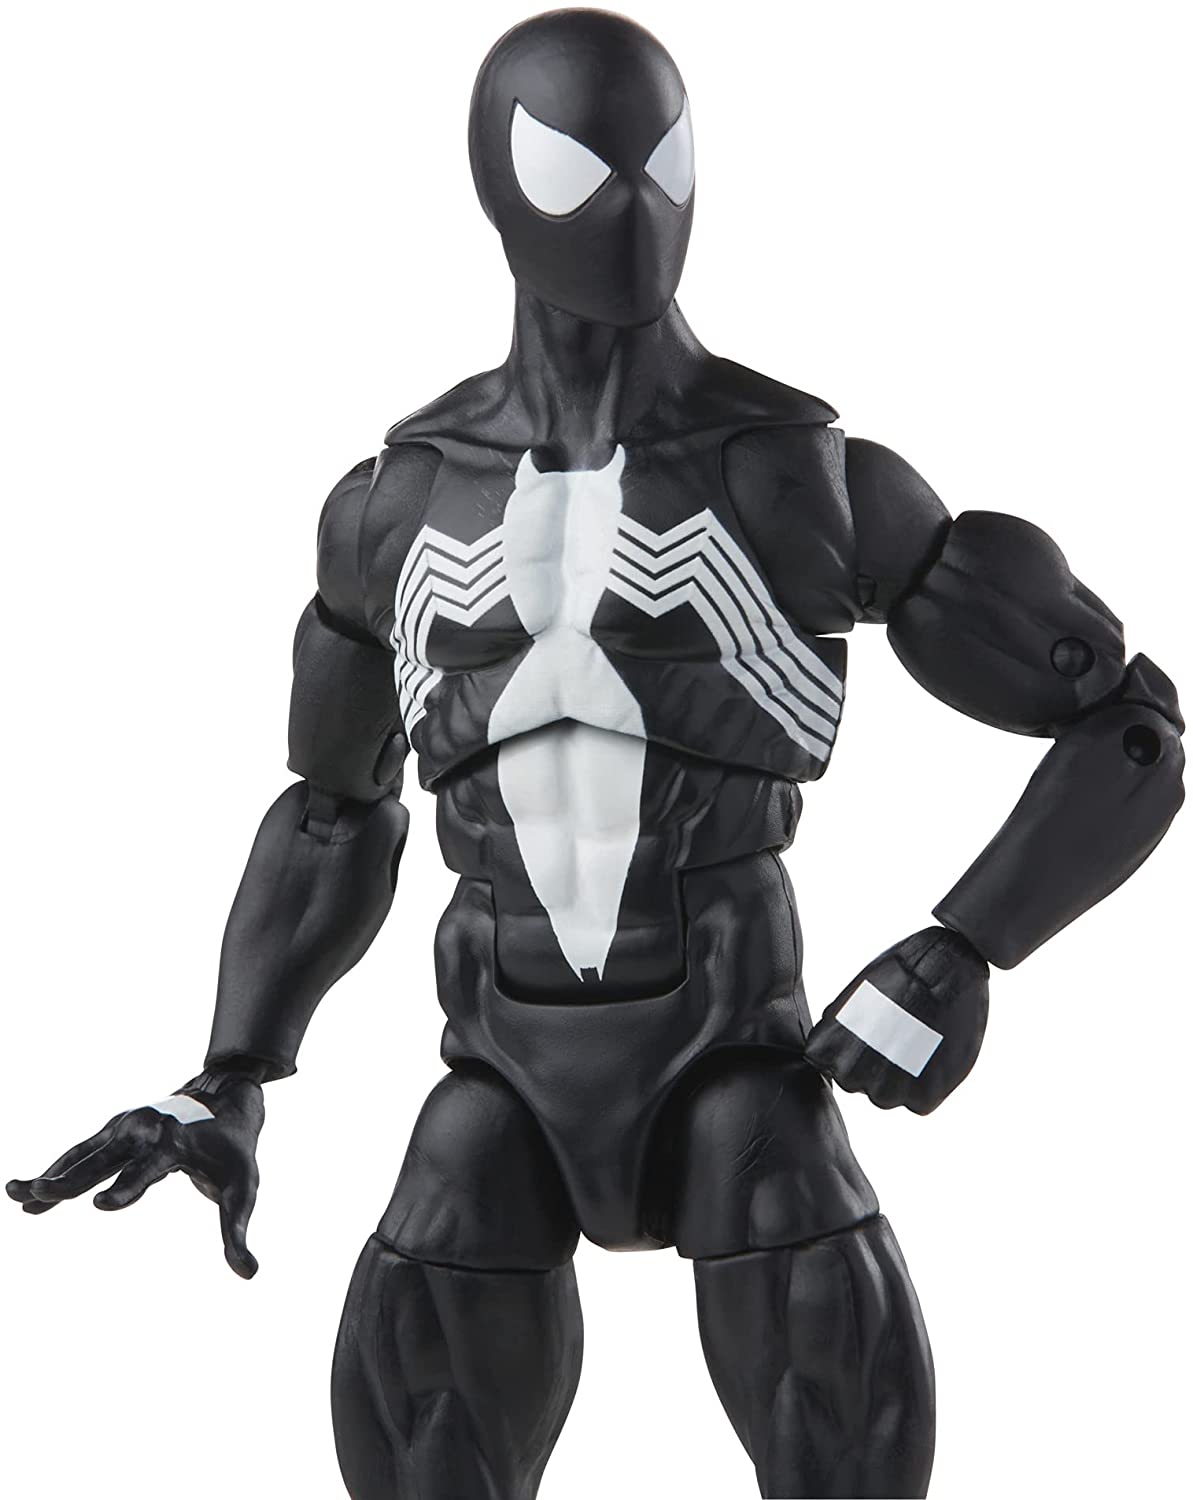 Spider-Man Marvel Legends Series 6-inch Symbiote Action Figure Toy